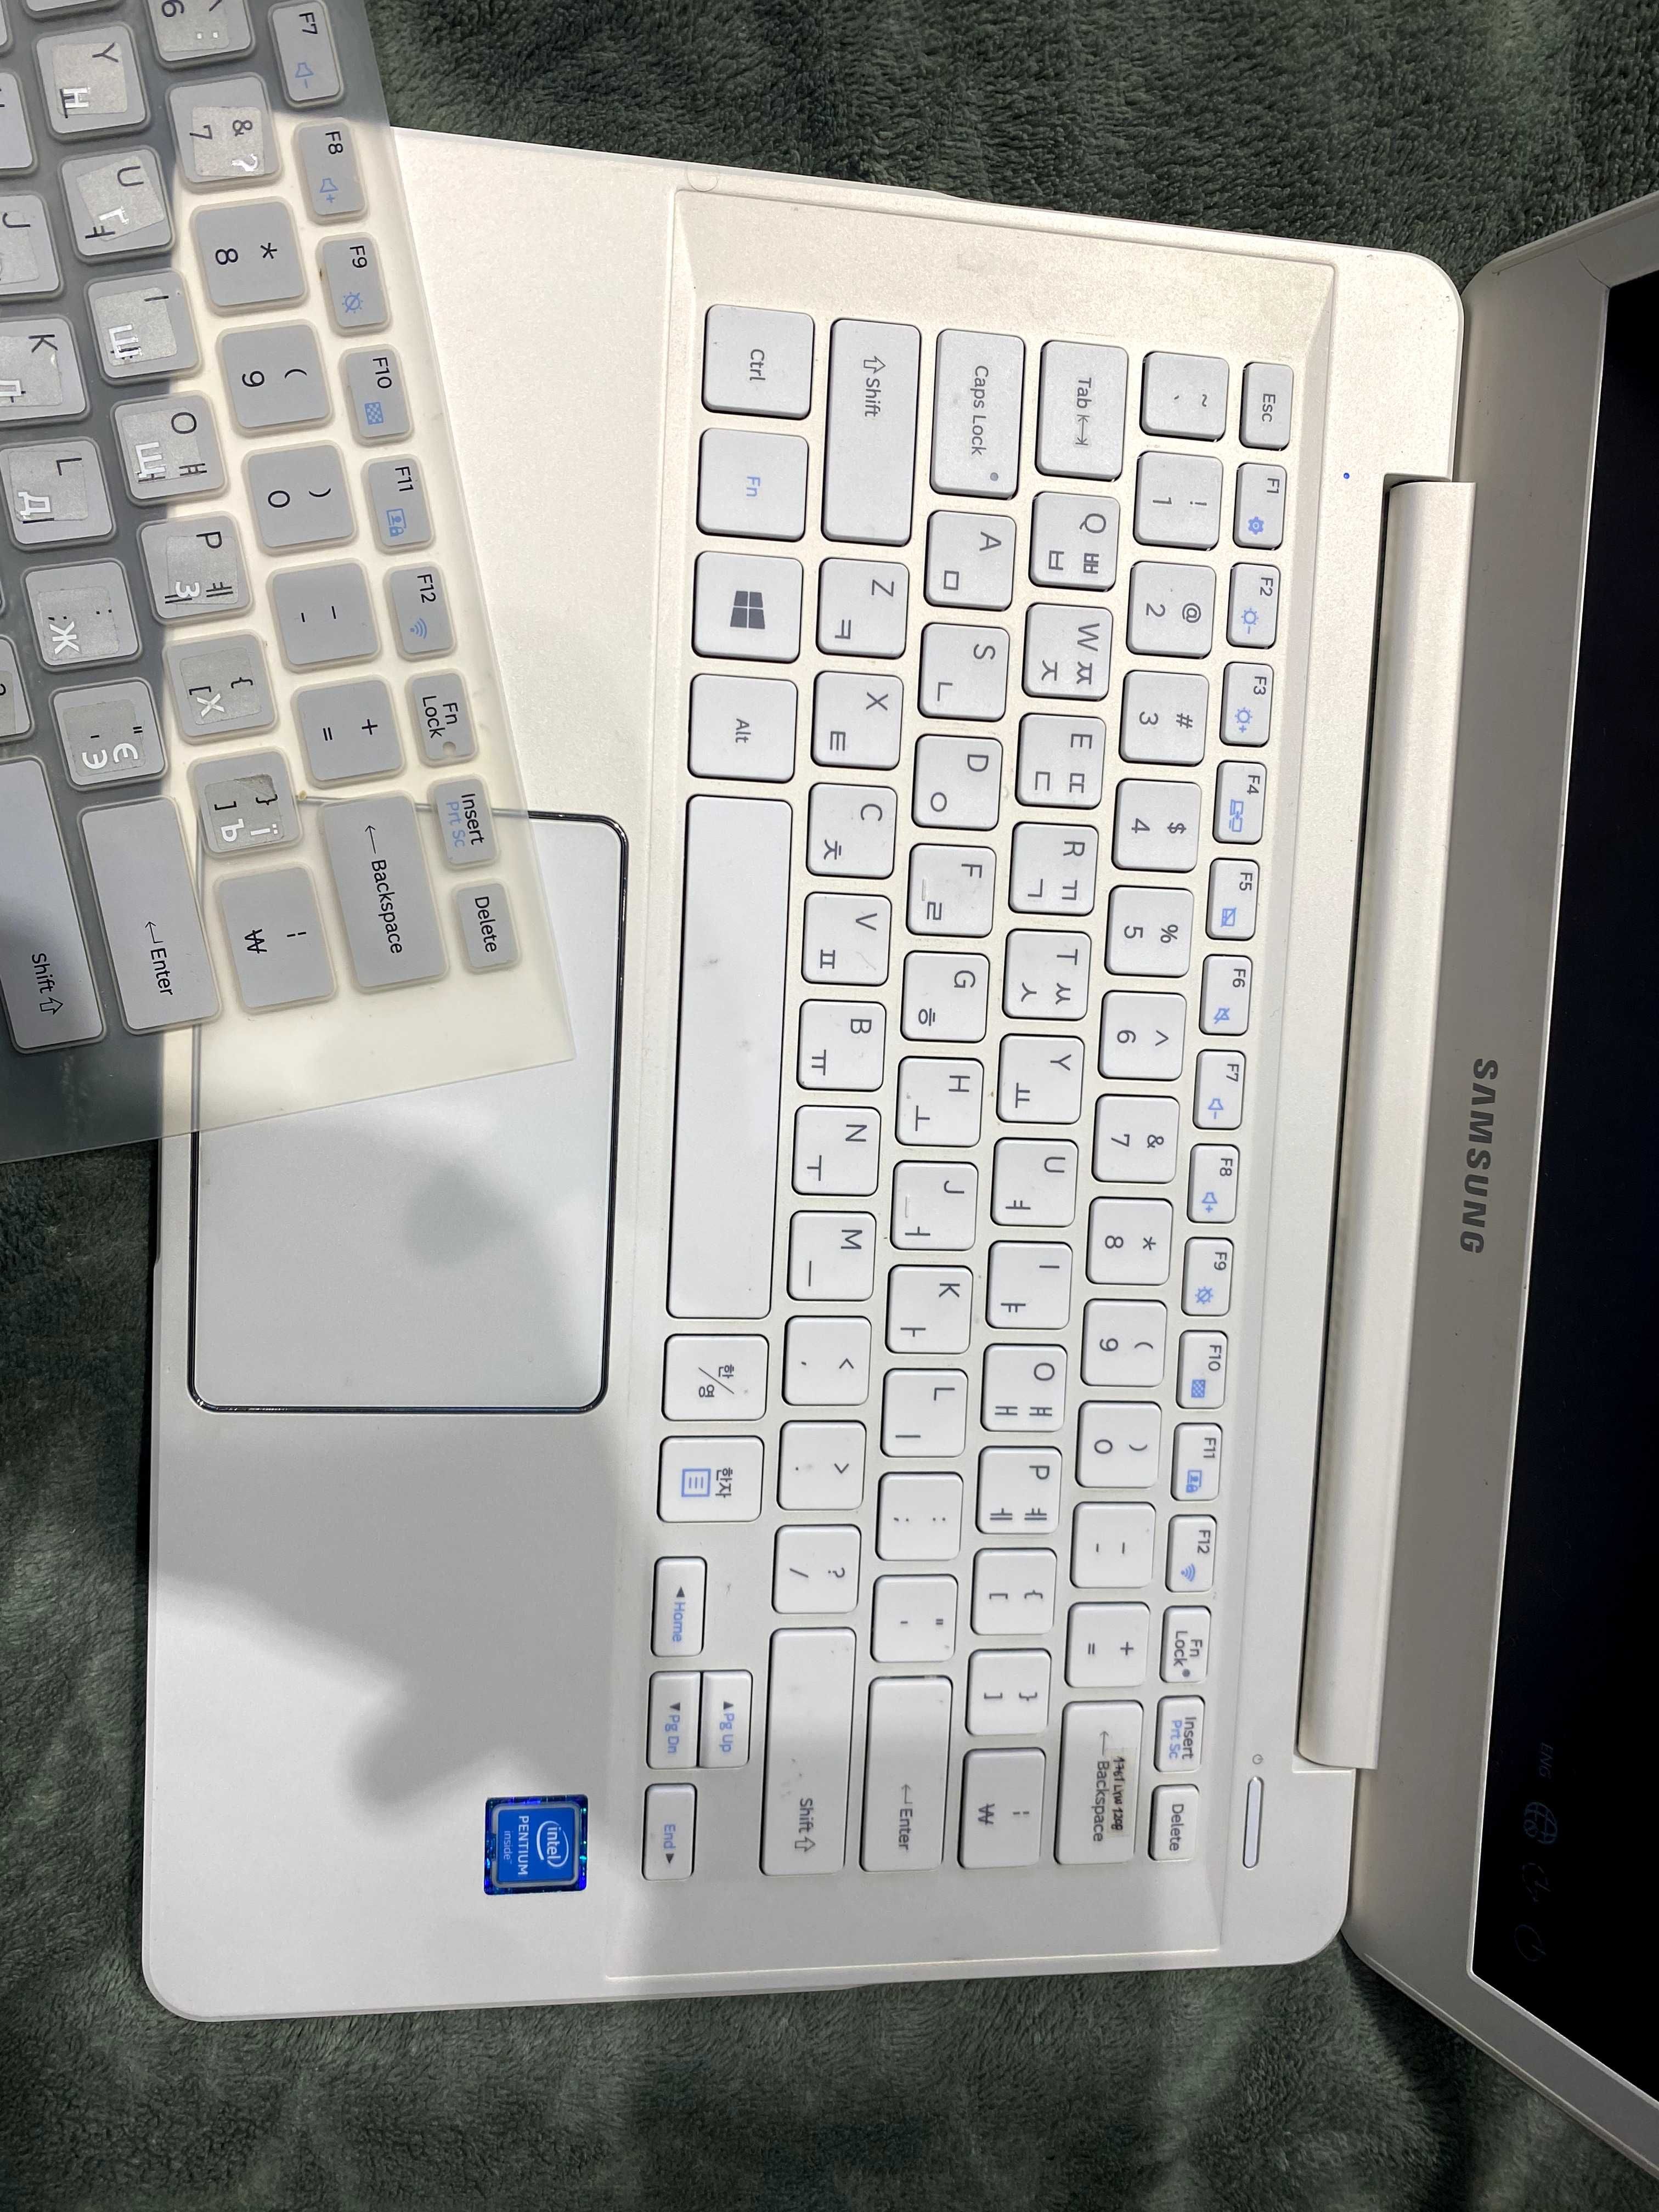 Ноутбук Samsung Laptop 9 Lite (910S3L)